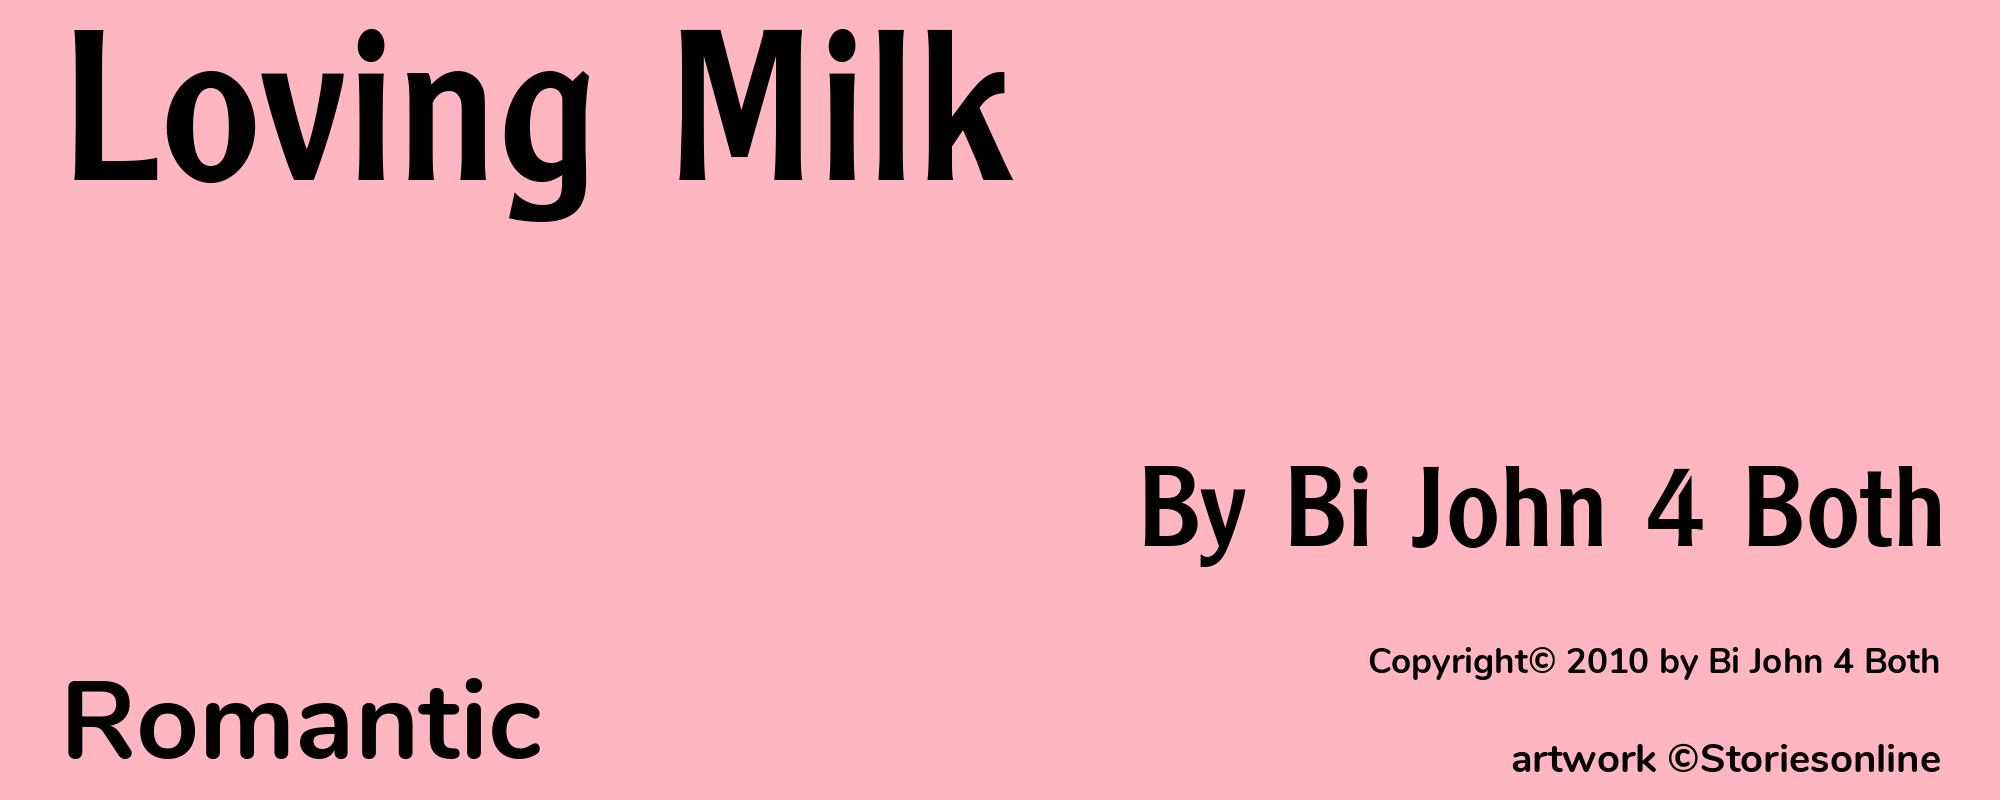 Loving Milk - Cover